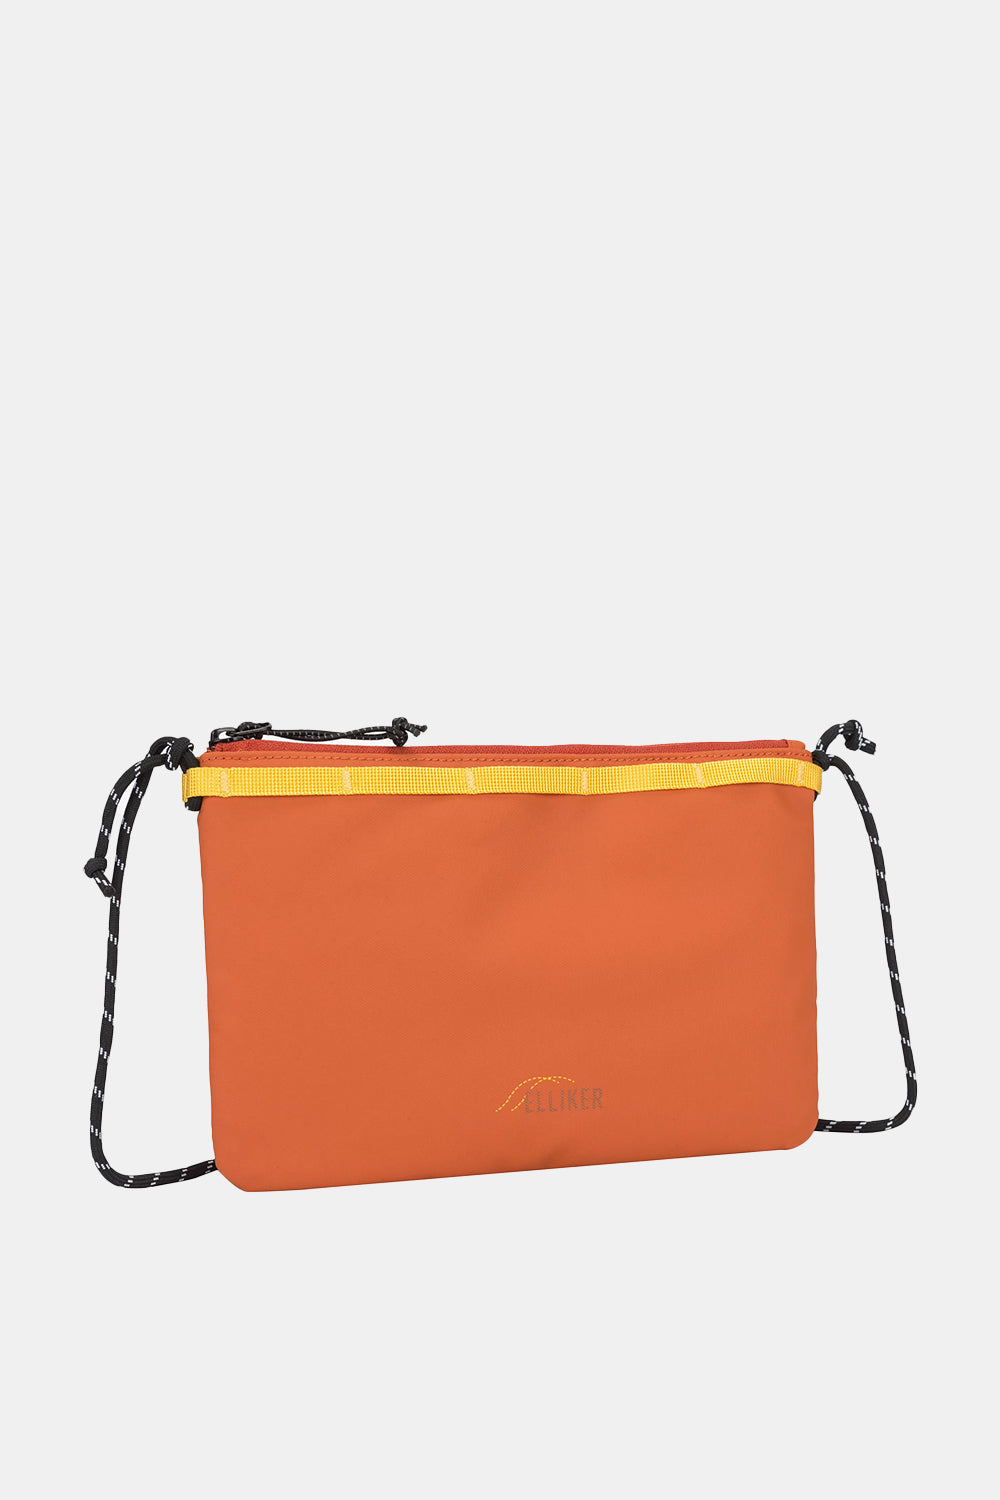 Elliker Hetchell Sacoche Bag 1L (Orange)
